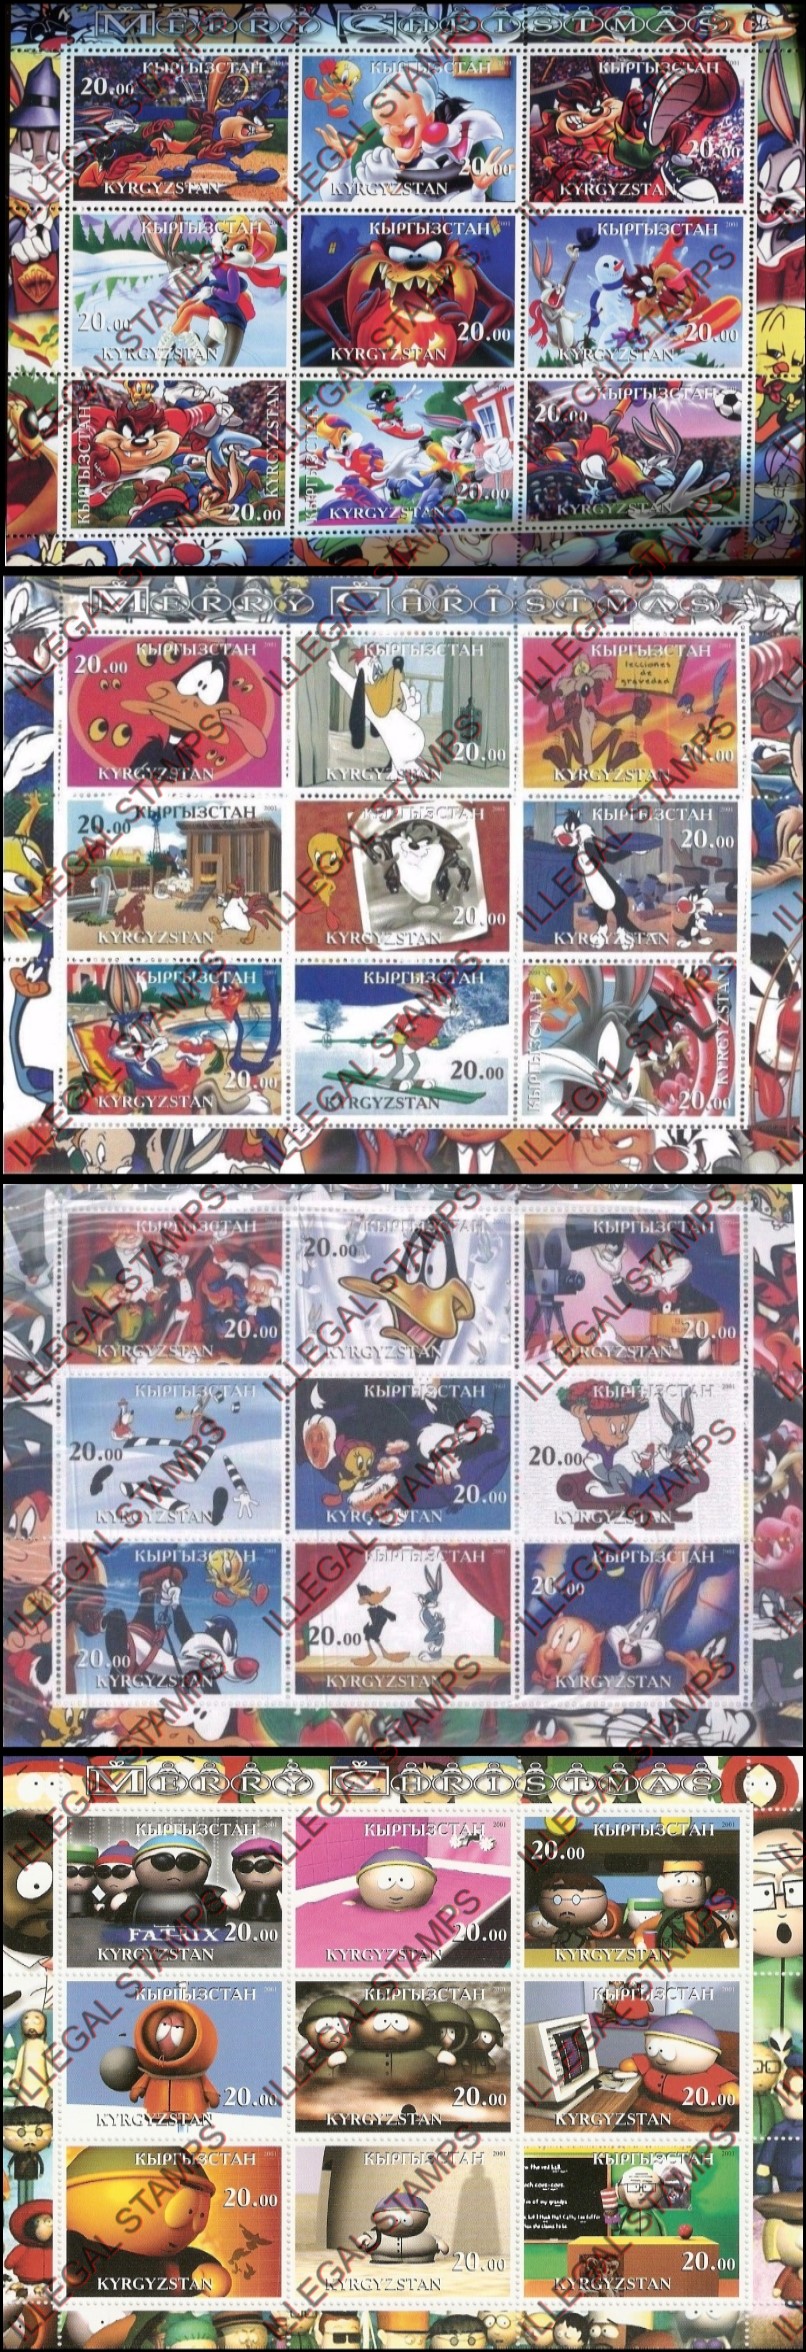 Kyrgyzstan 2001 Cartoons Merry Christmas Illegal Stamp Sheetlets of Nine